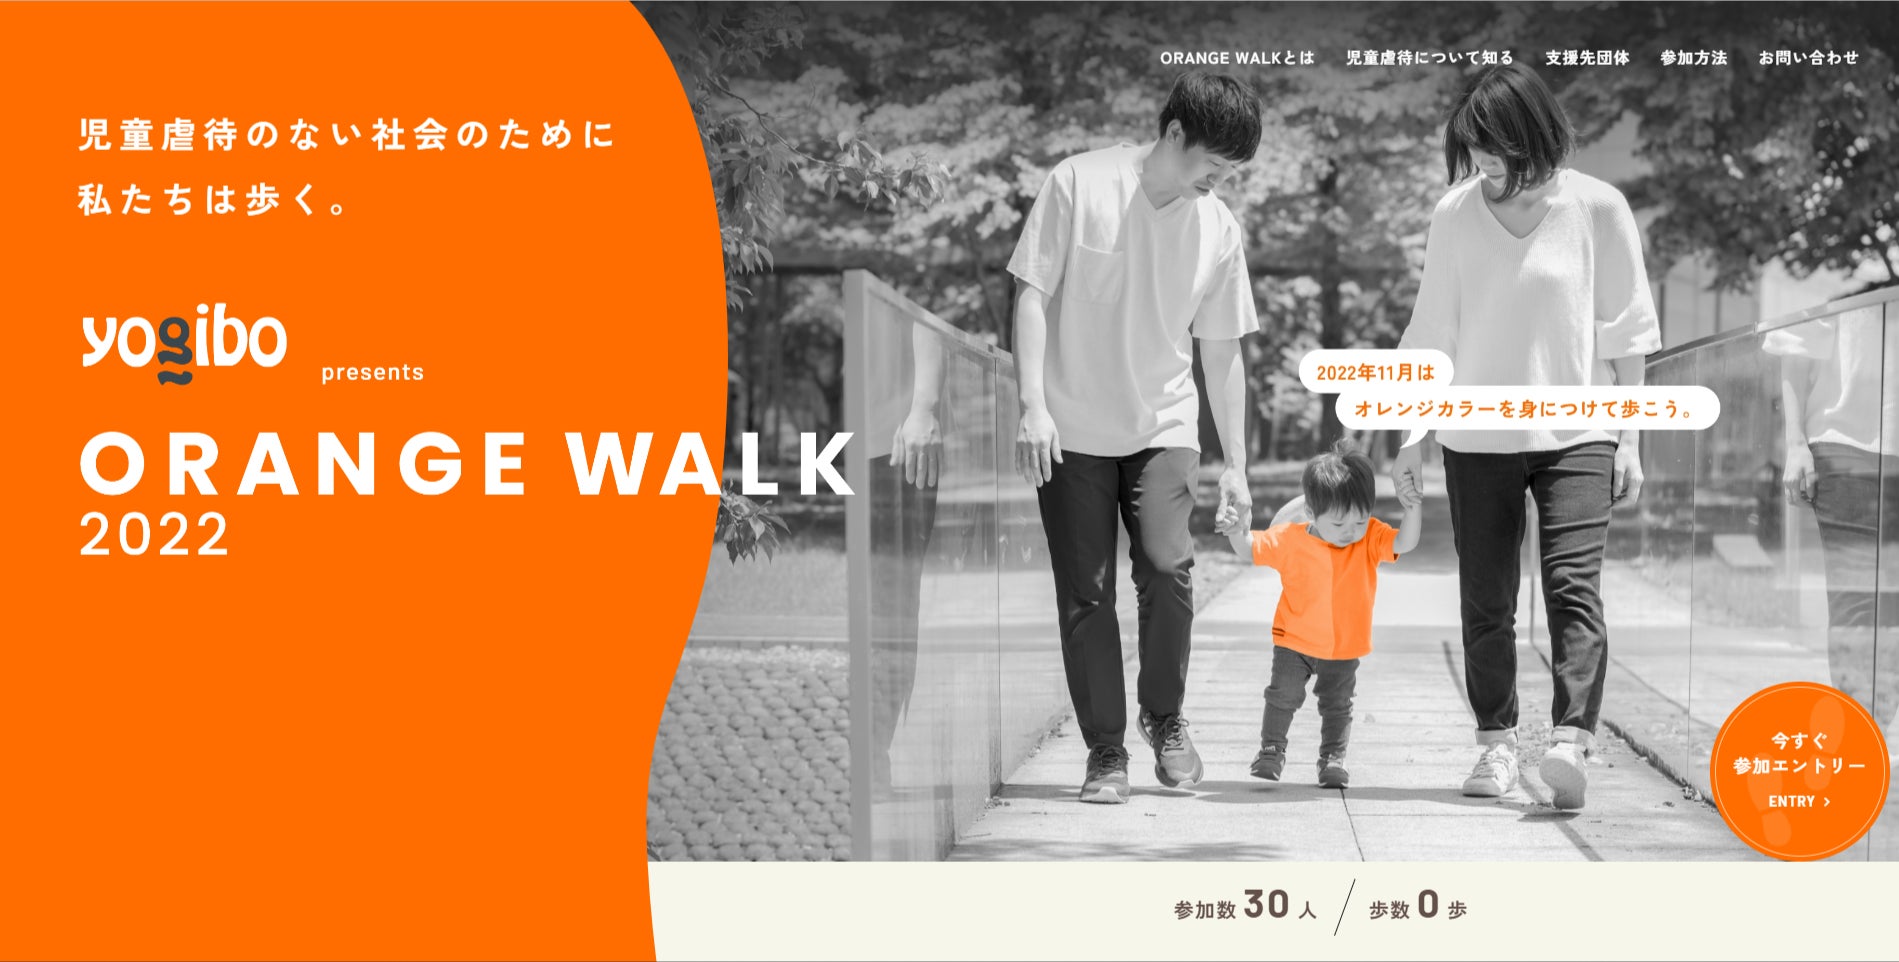 『Yogibo presents ORANGE WALK 2022』を開催のサブ画像1